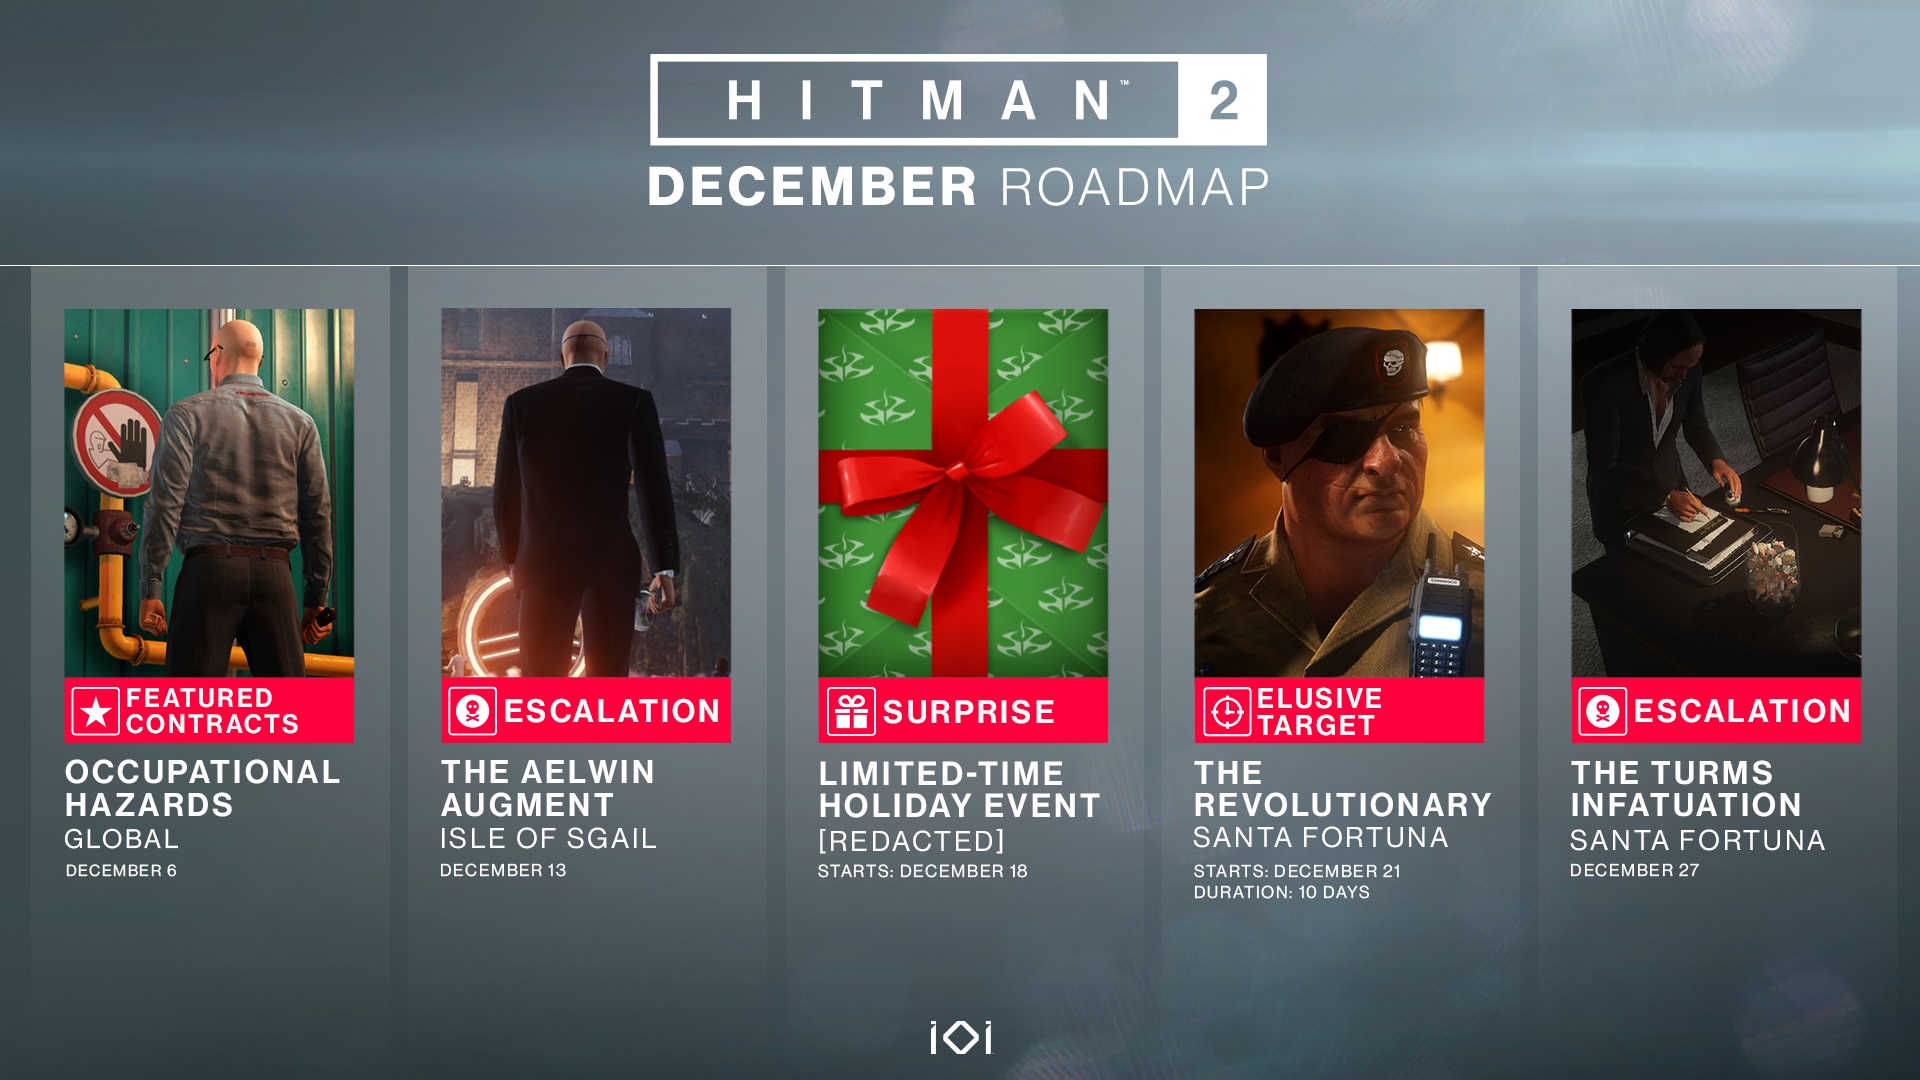 Hitman 2 December content roadmap.